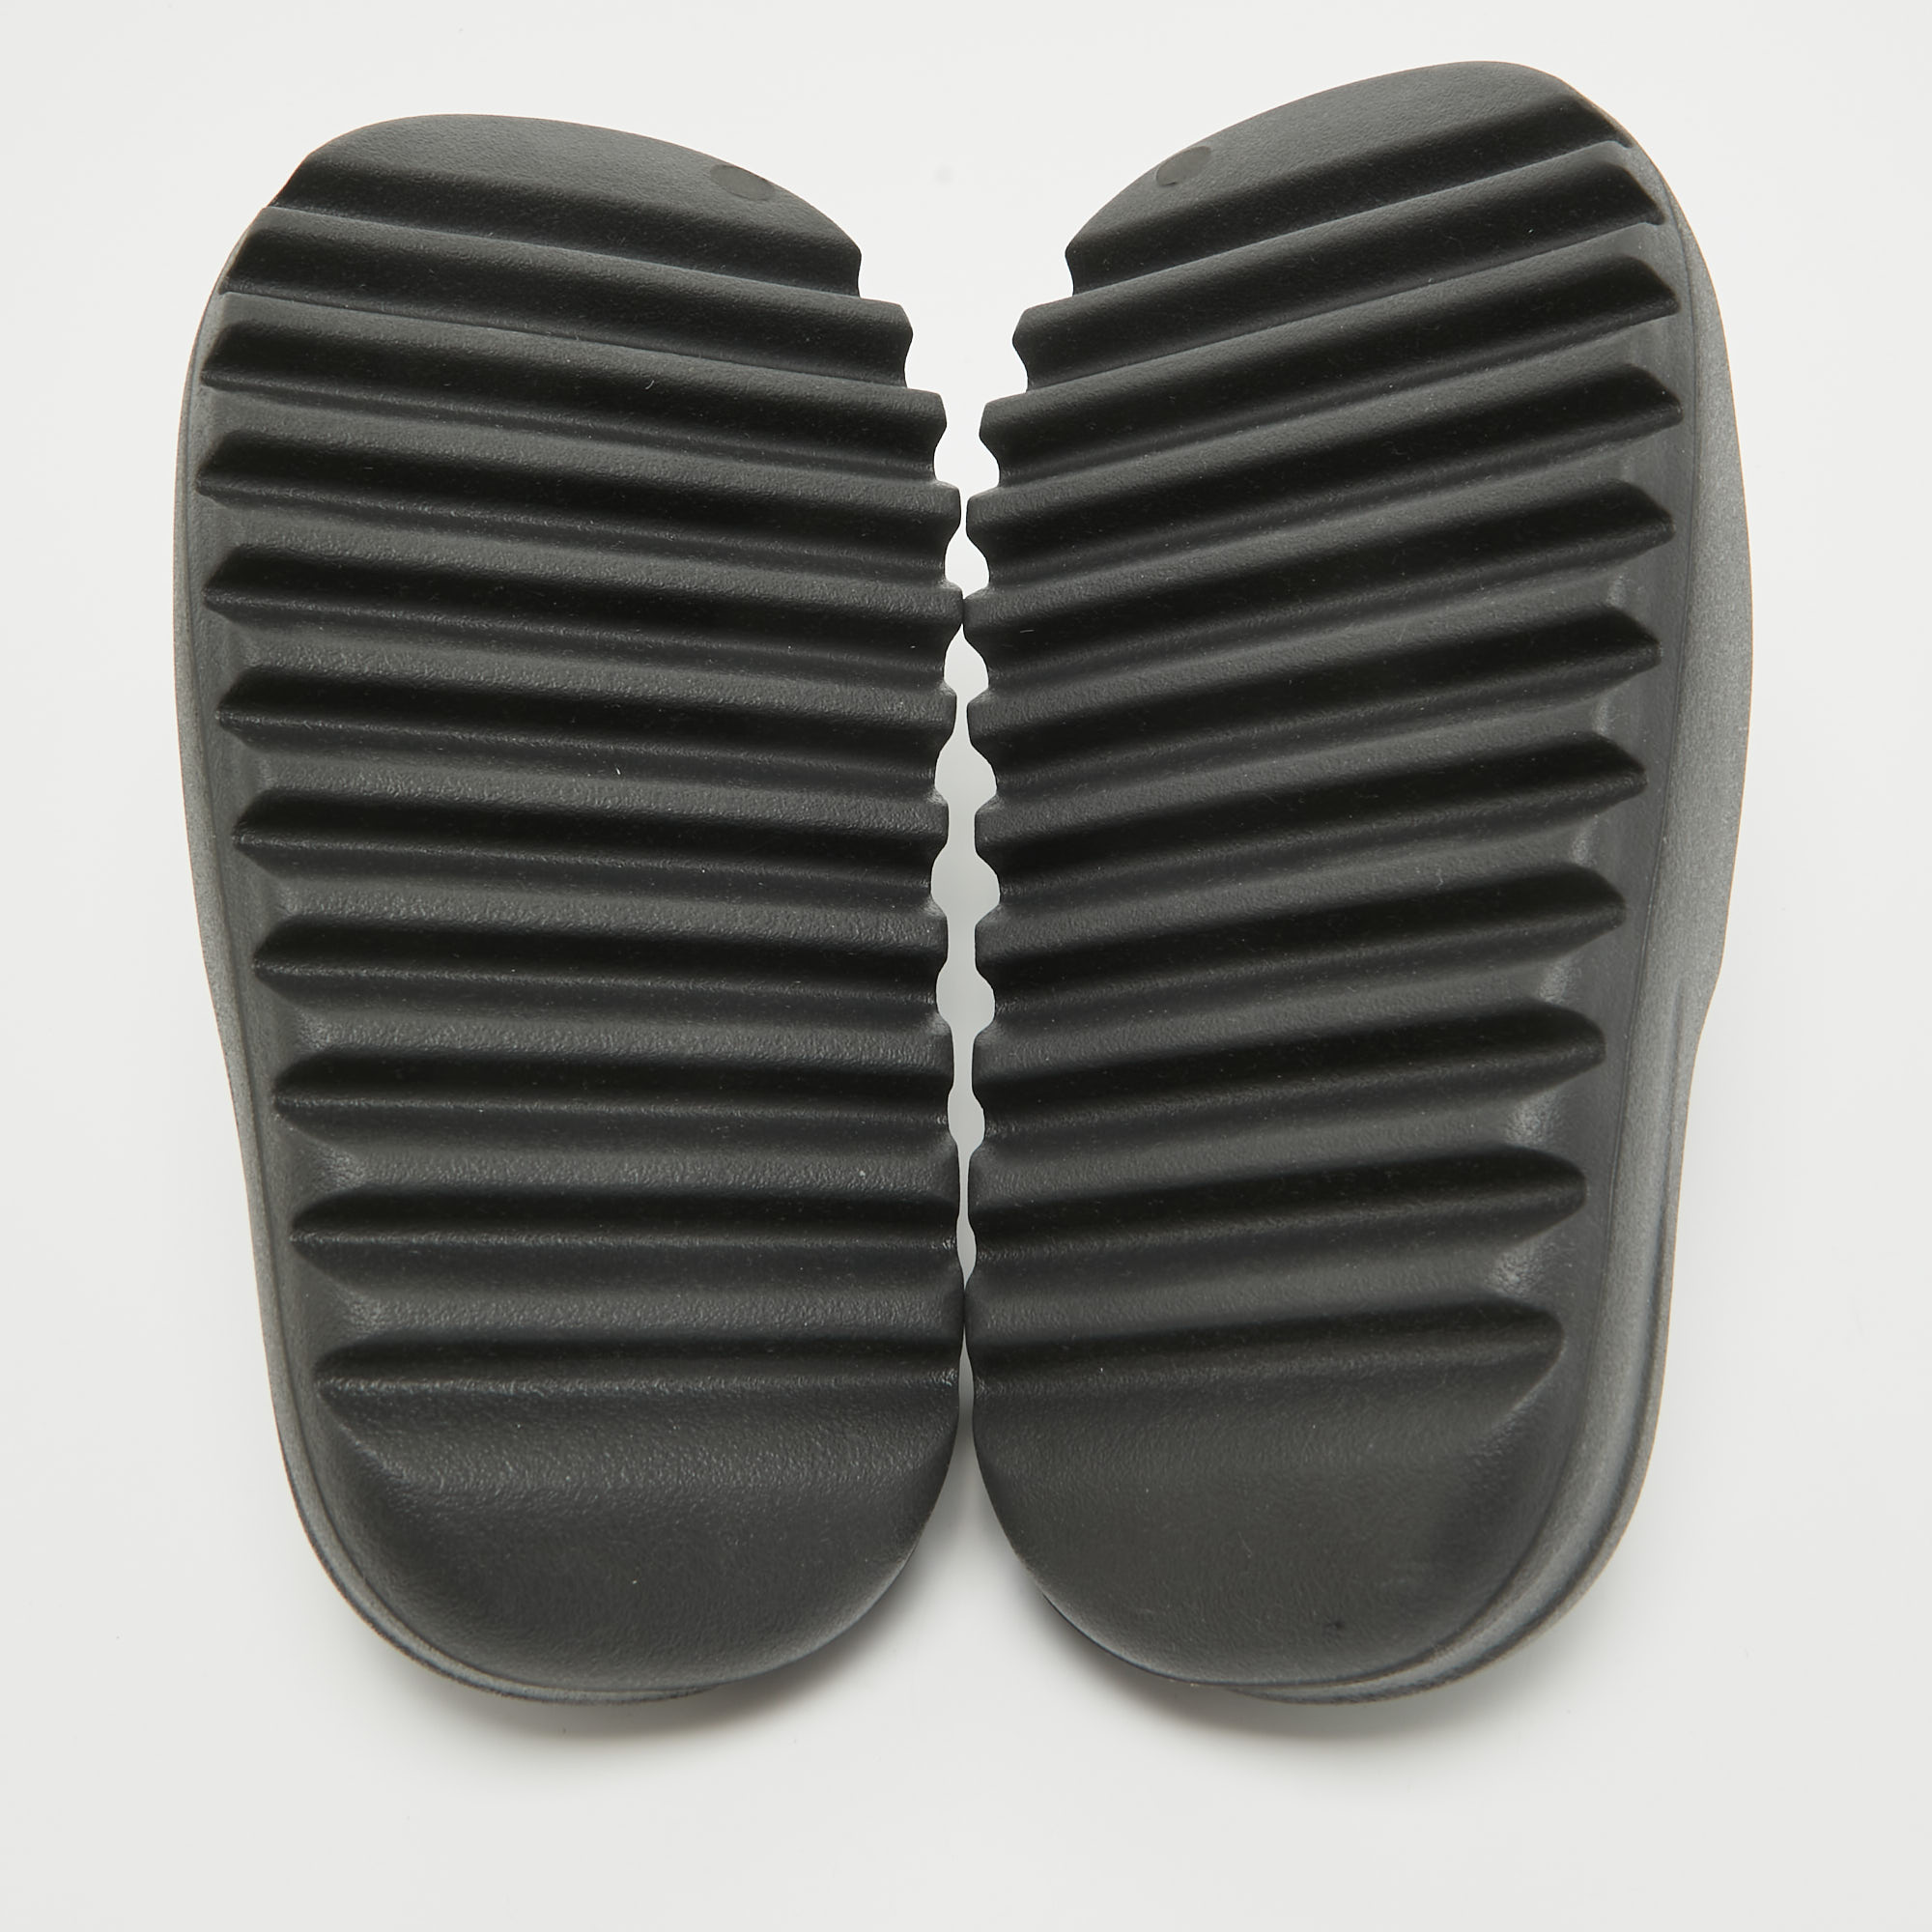 Yeezy X Adidas Black Rubber Onyx Flat Slides Size 37